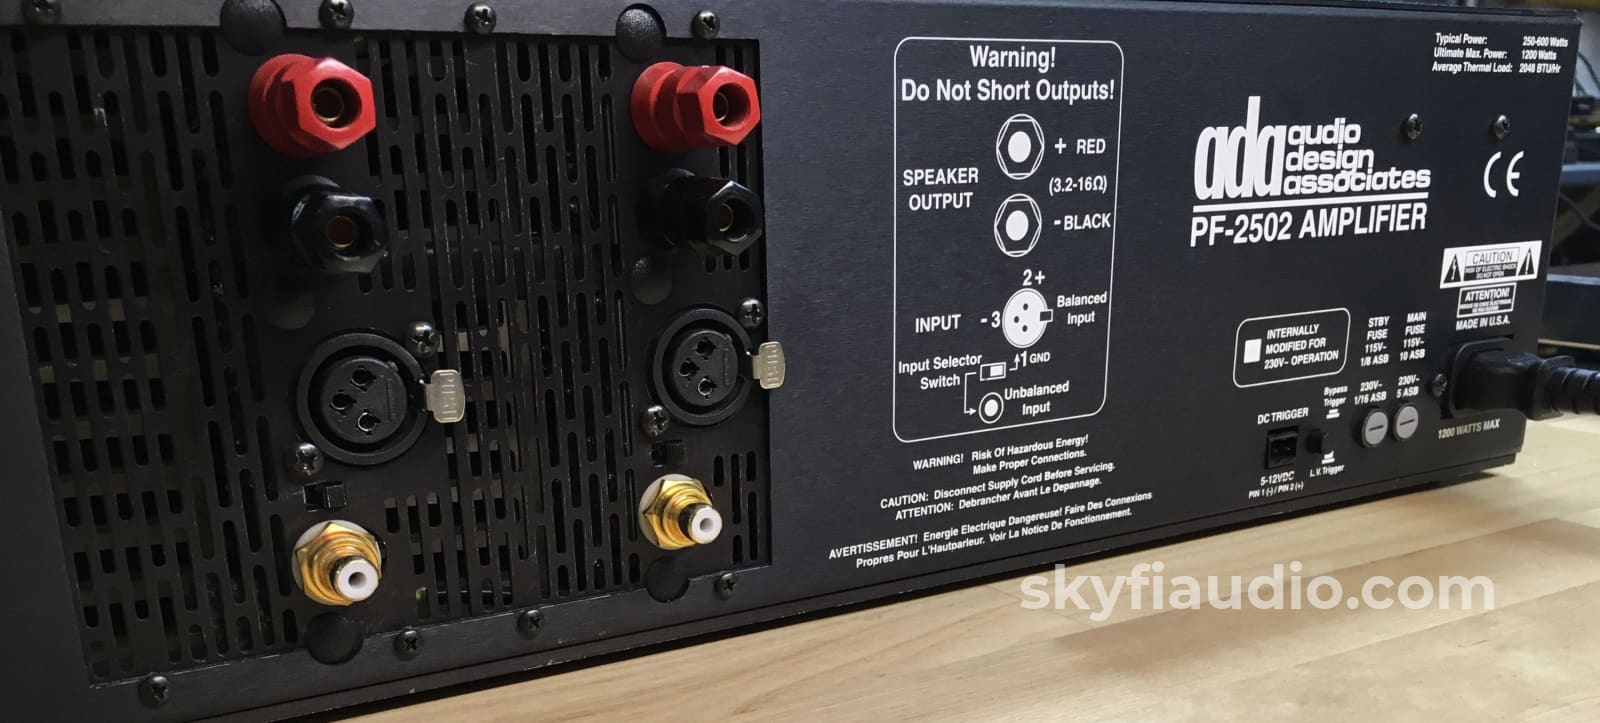 Audio Design Associates Flagship Pf-2502 Amplifier